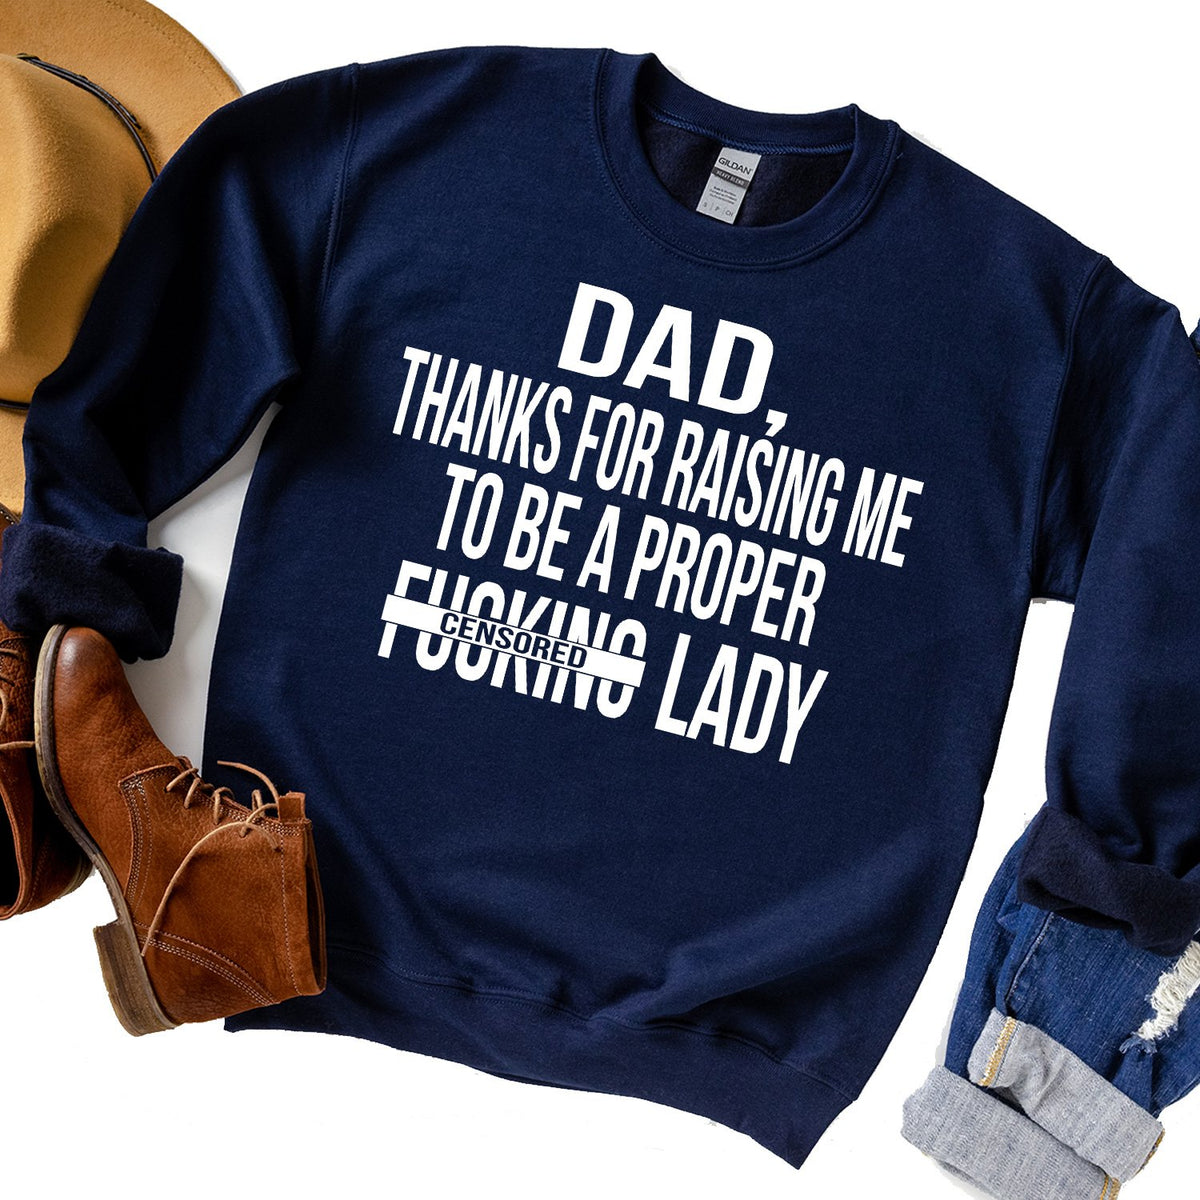 DAD Thanks For Raising Me To Be A Proper Fucking Lady - Long Sleeve Heavy Crewneck Sweatshirt